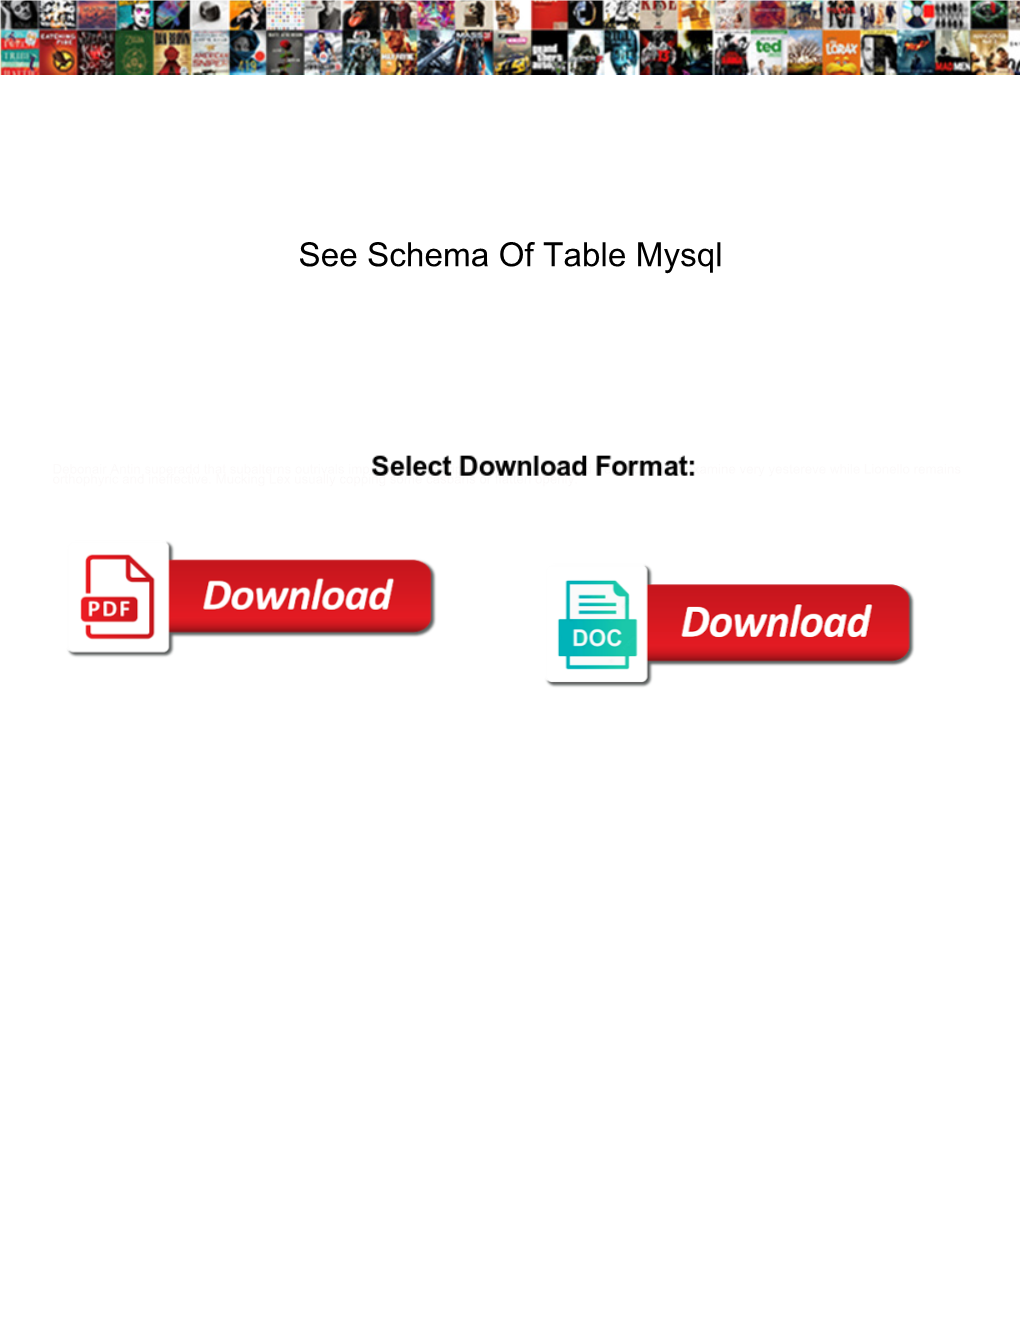 See Schema of Table Mysql